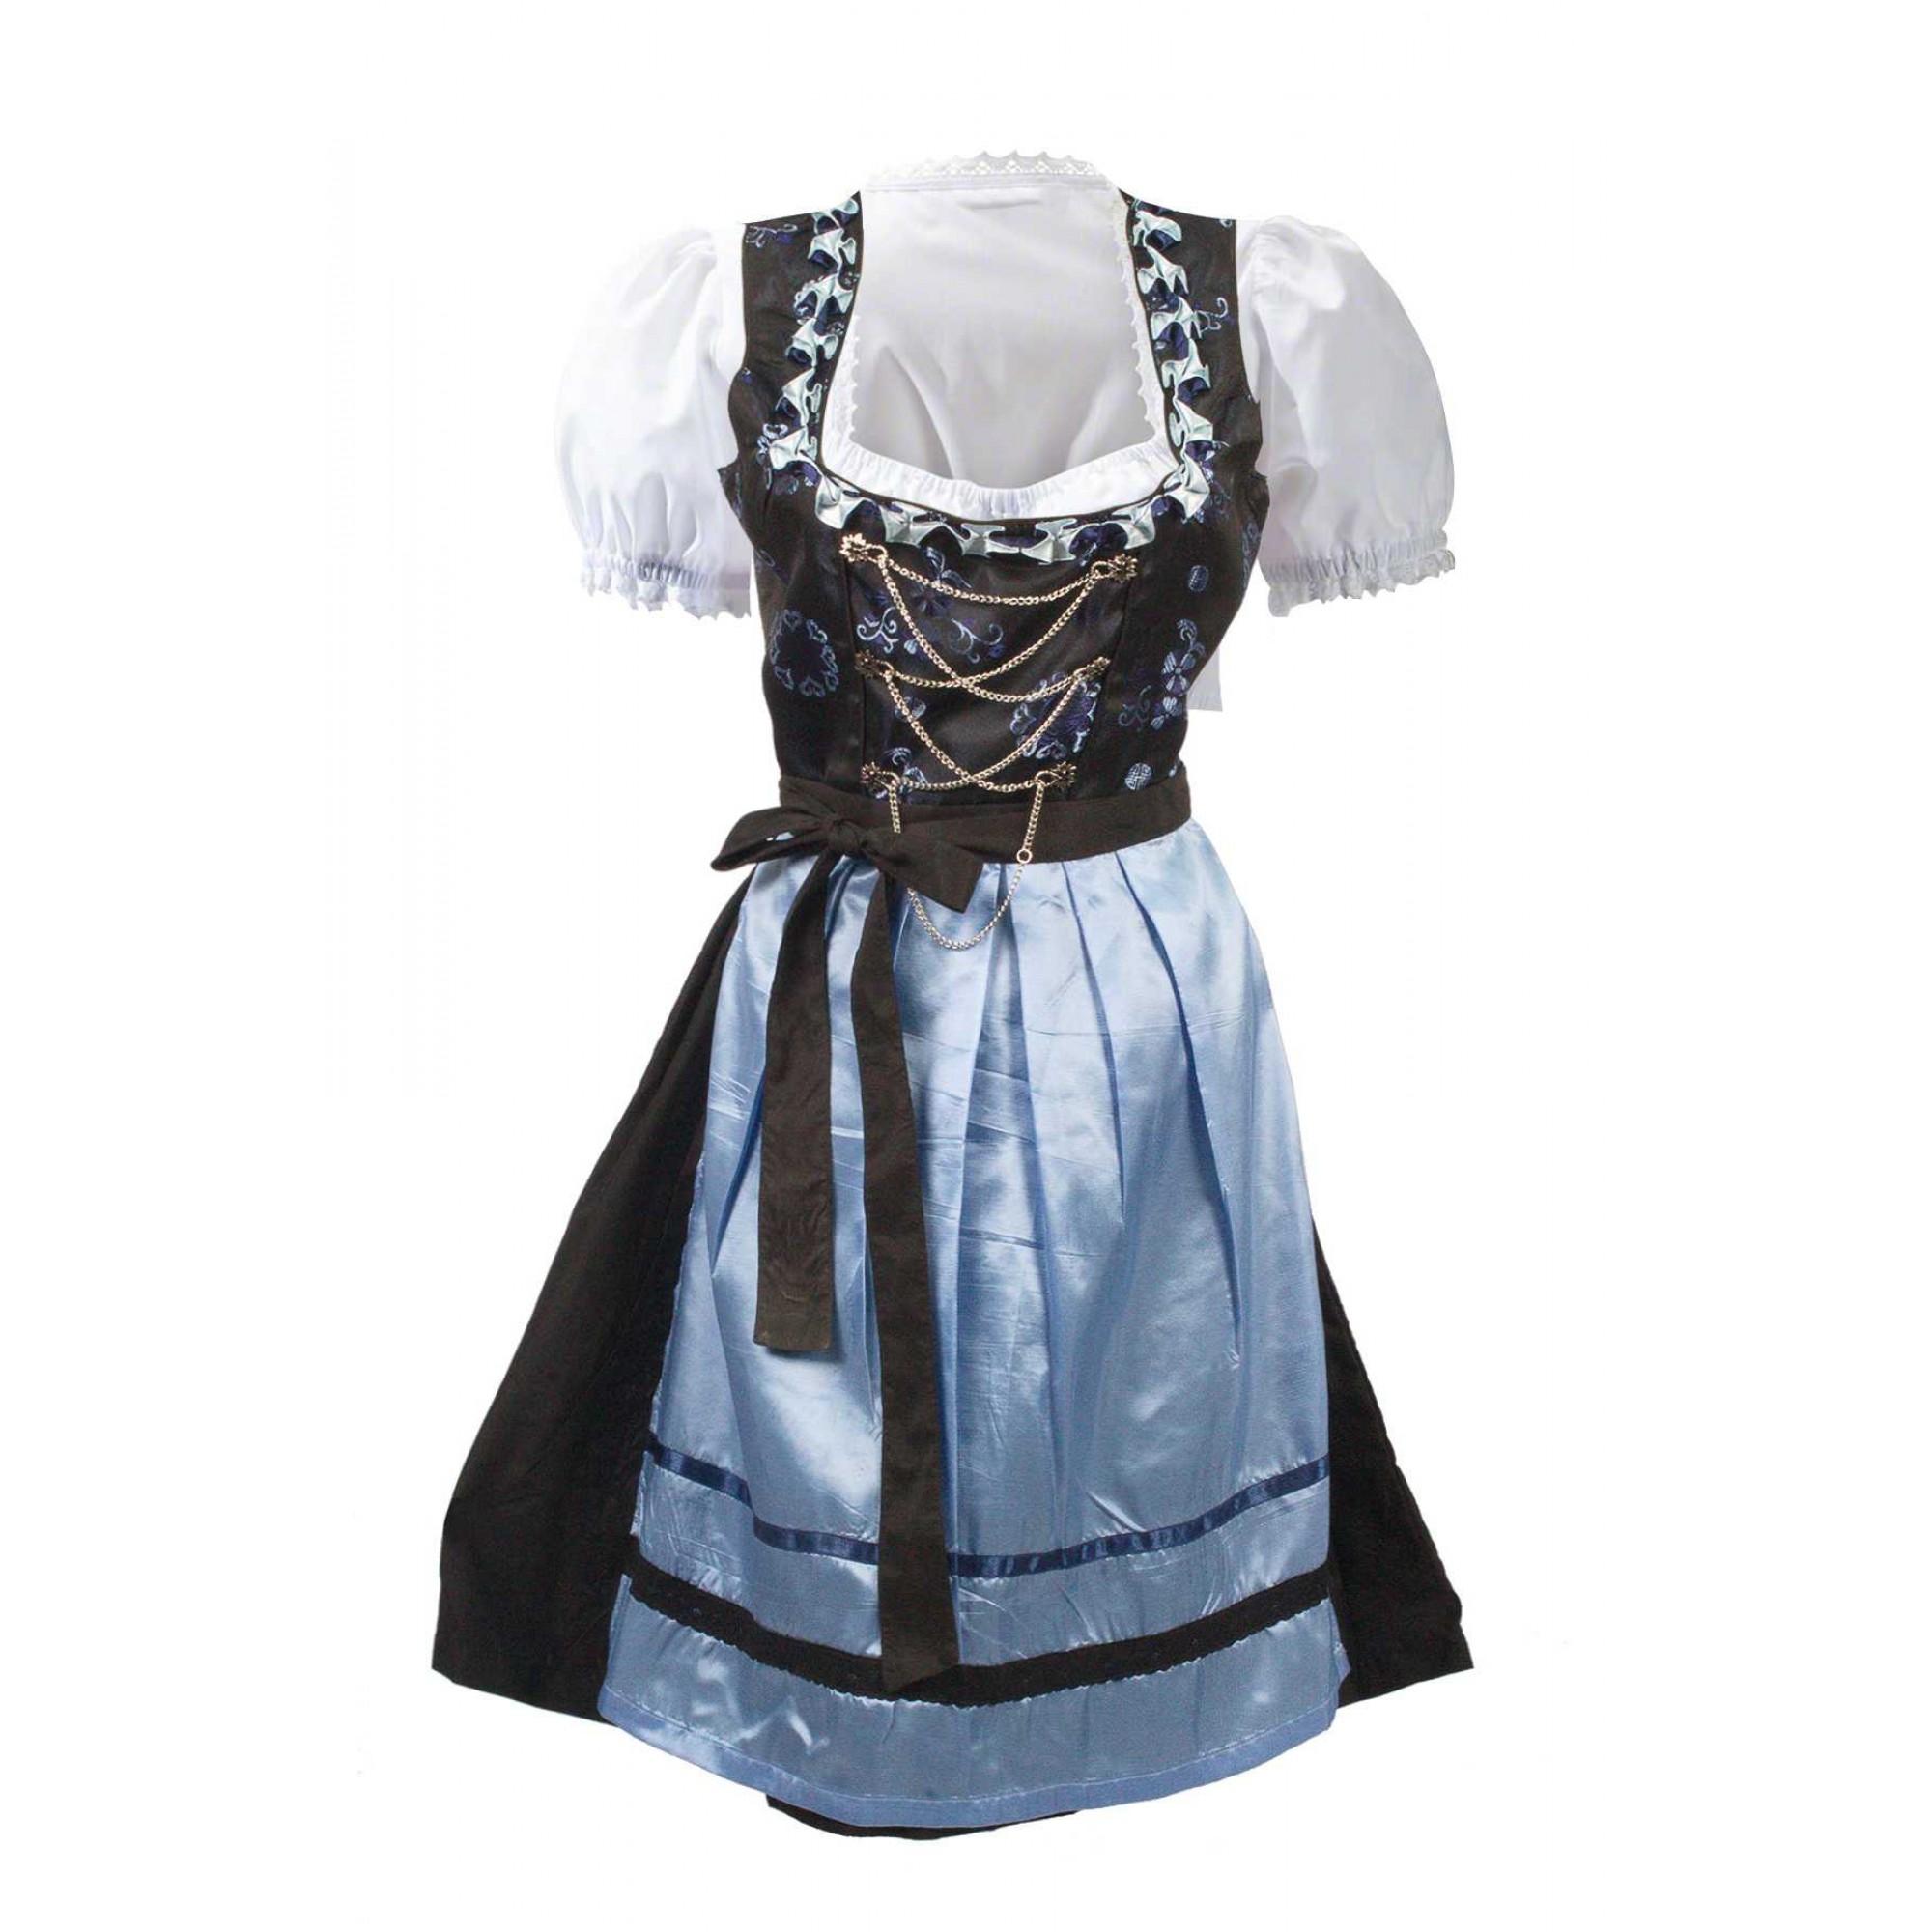 German Midi Dirndl Dress Vintage Blue - Lederhosen Wears